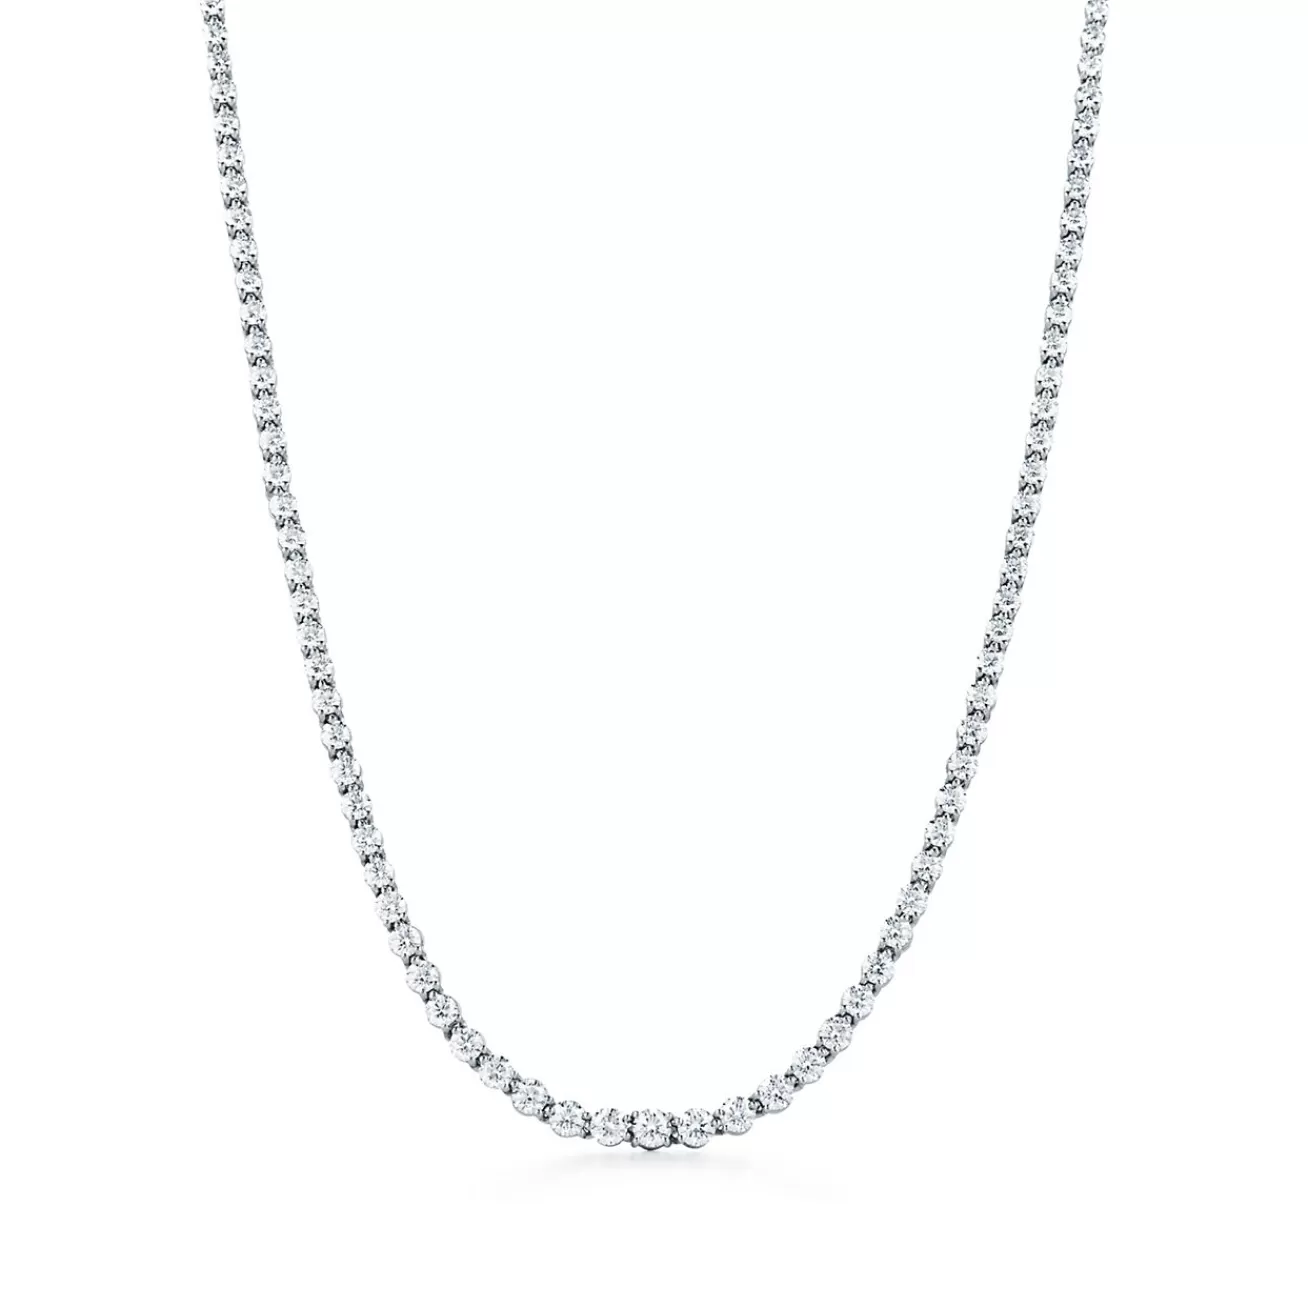 Tiffany & Co. Tiffany Victoria® graduated line necklace in platinum with diamonds. | ^ Necklaces & Pendants | Platinum Jewelry